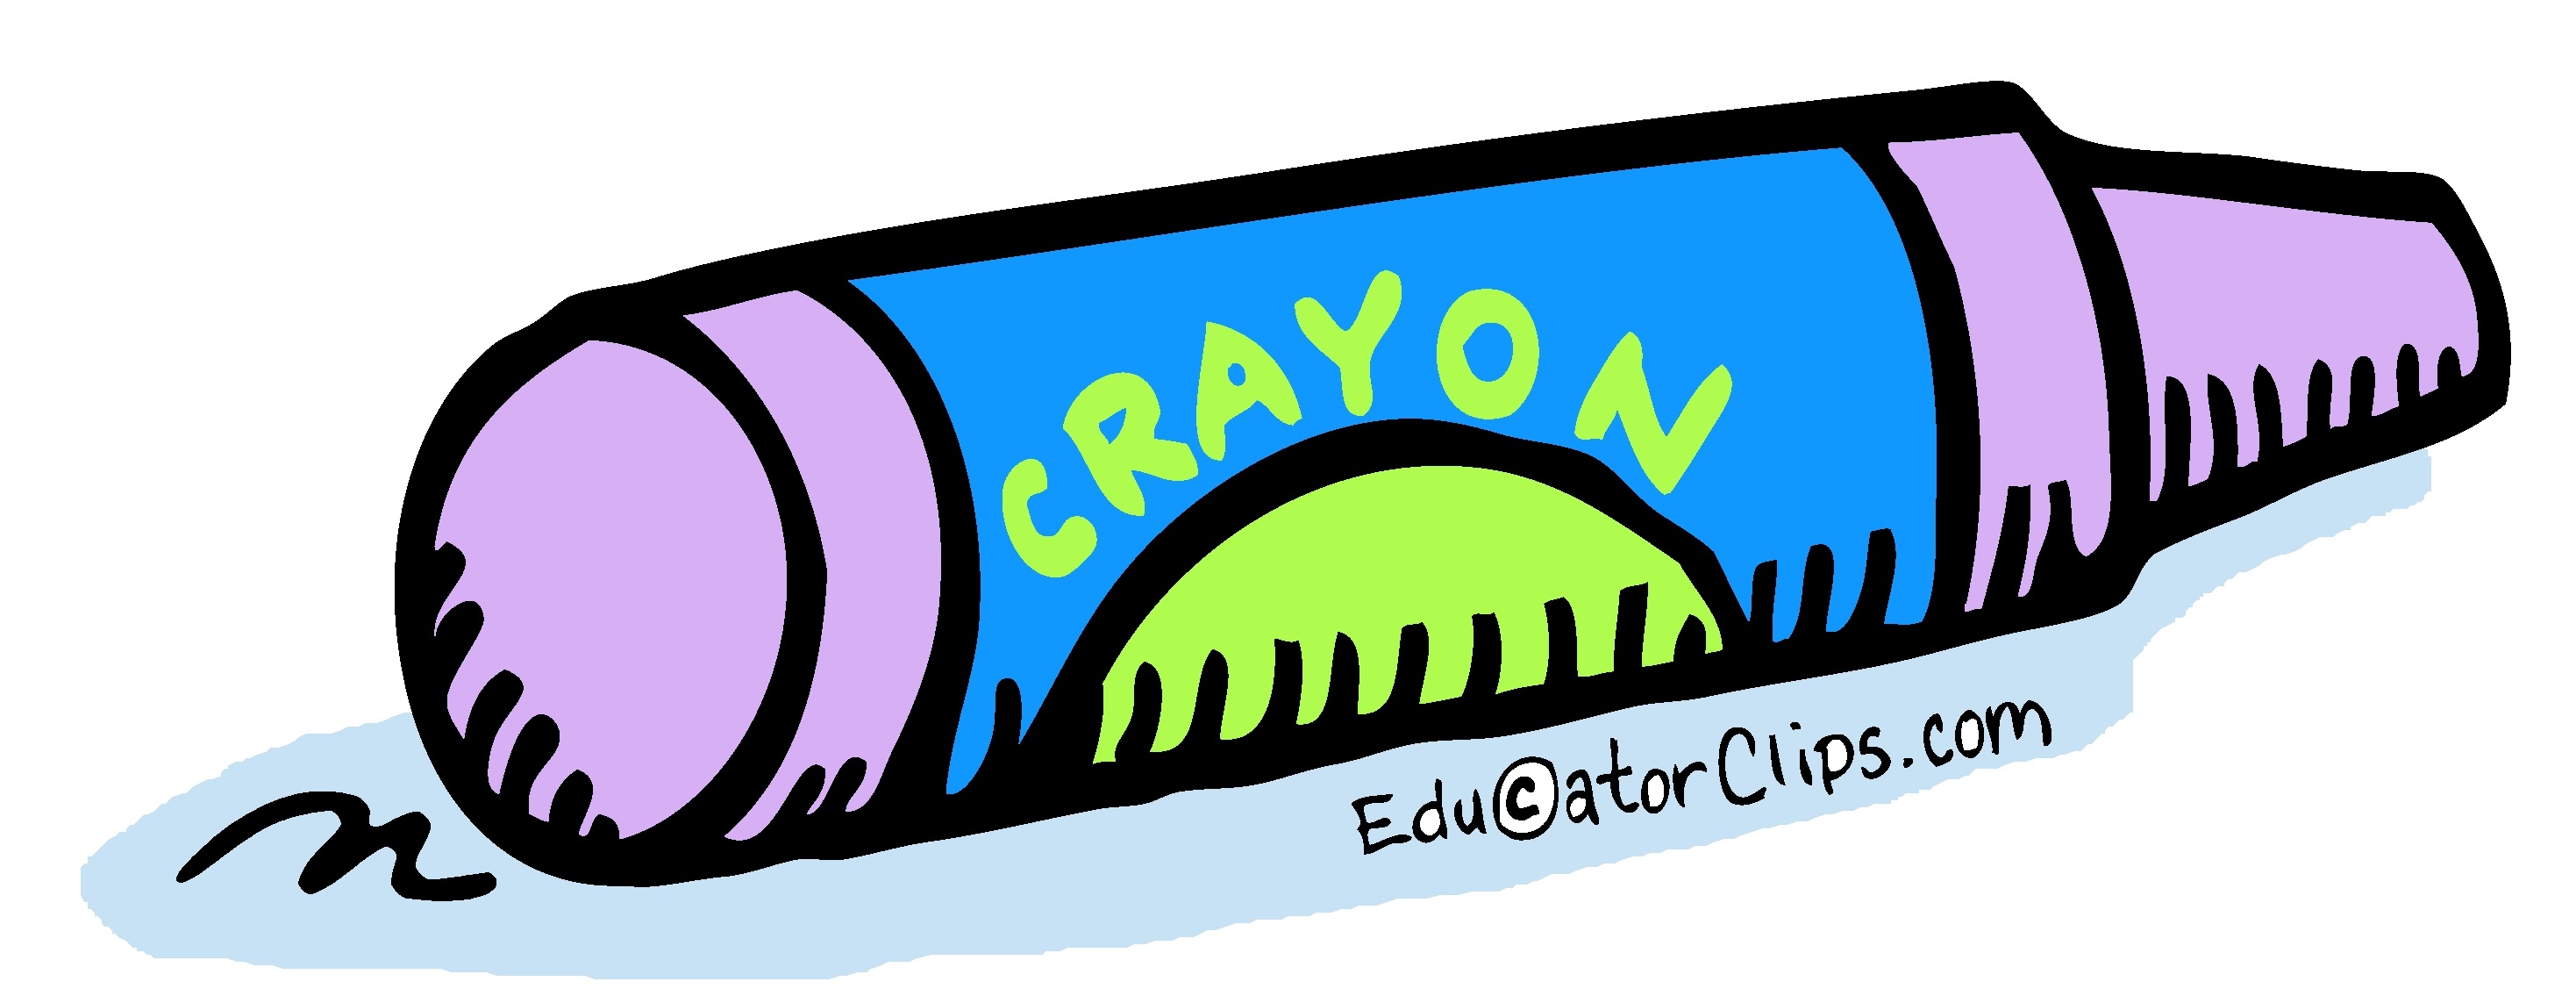 crayon clip art